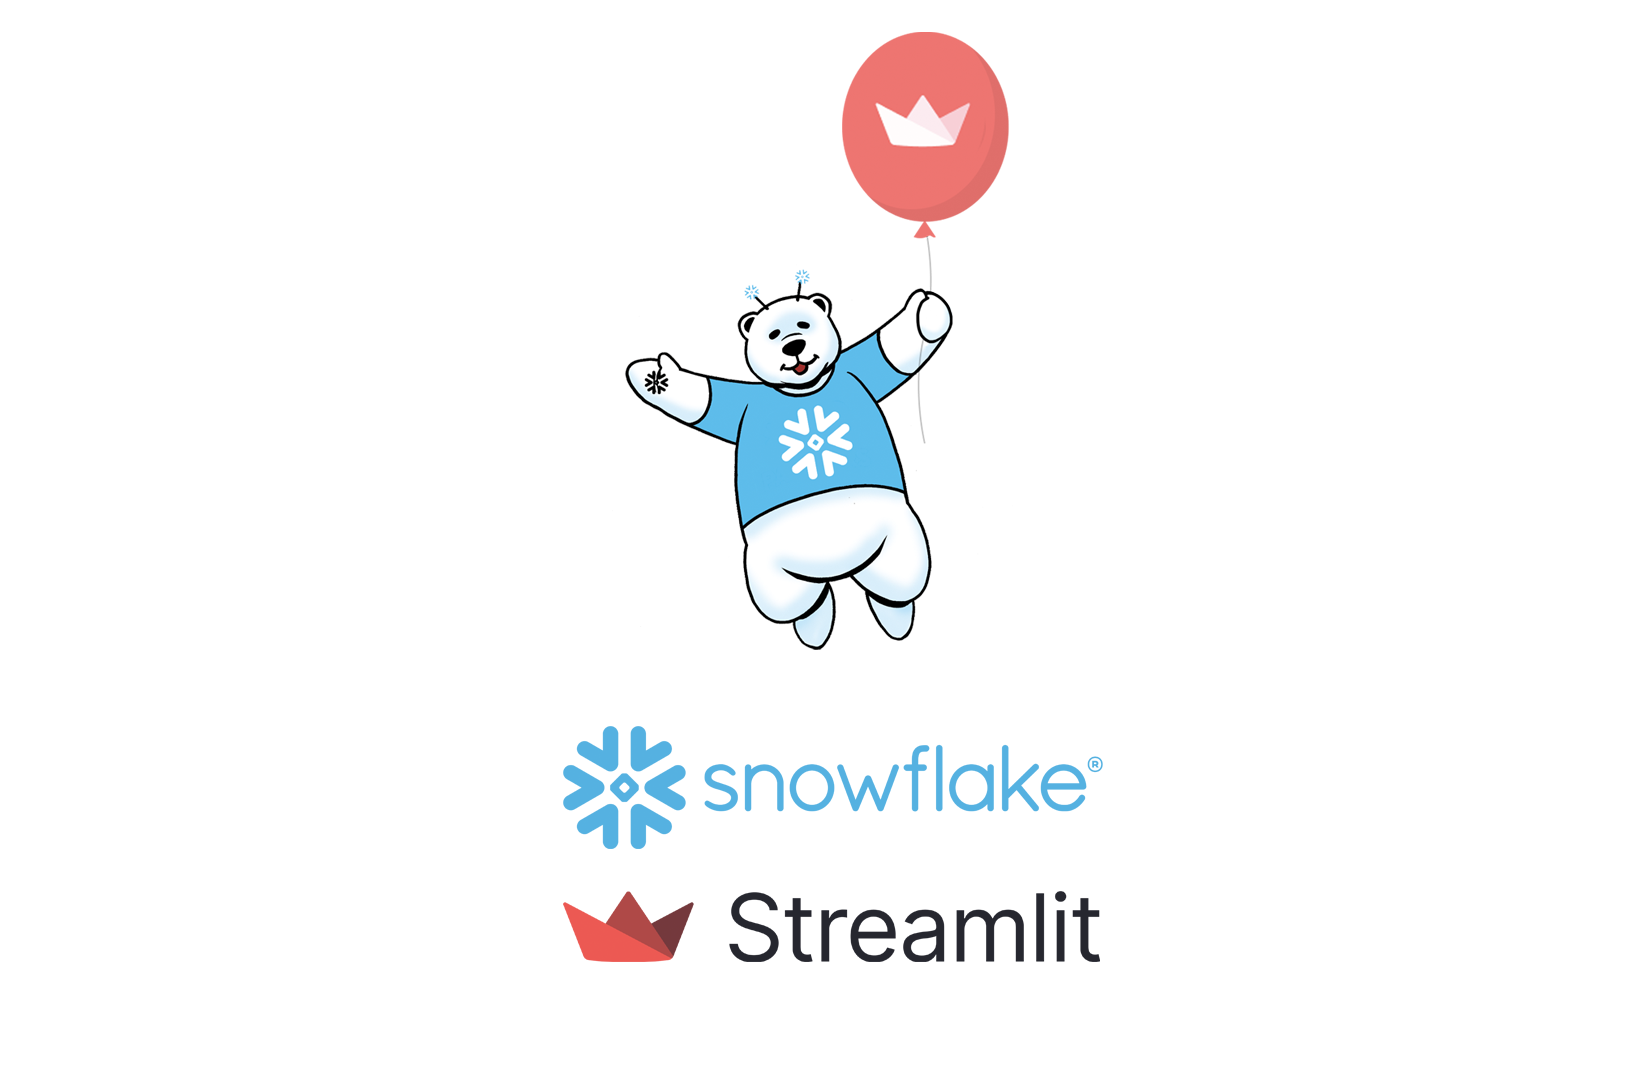 Democratizing Data Apps — Snowflake to Acquire Streamlit